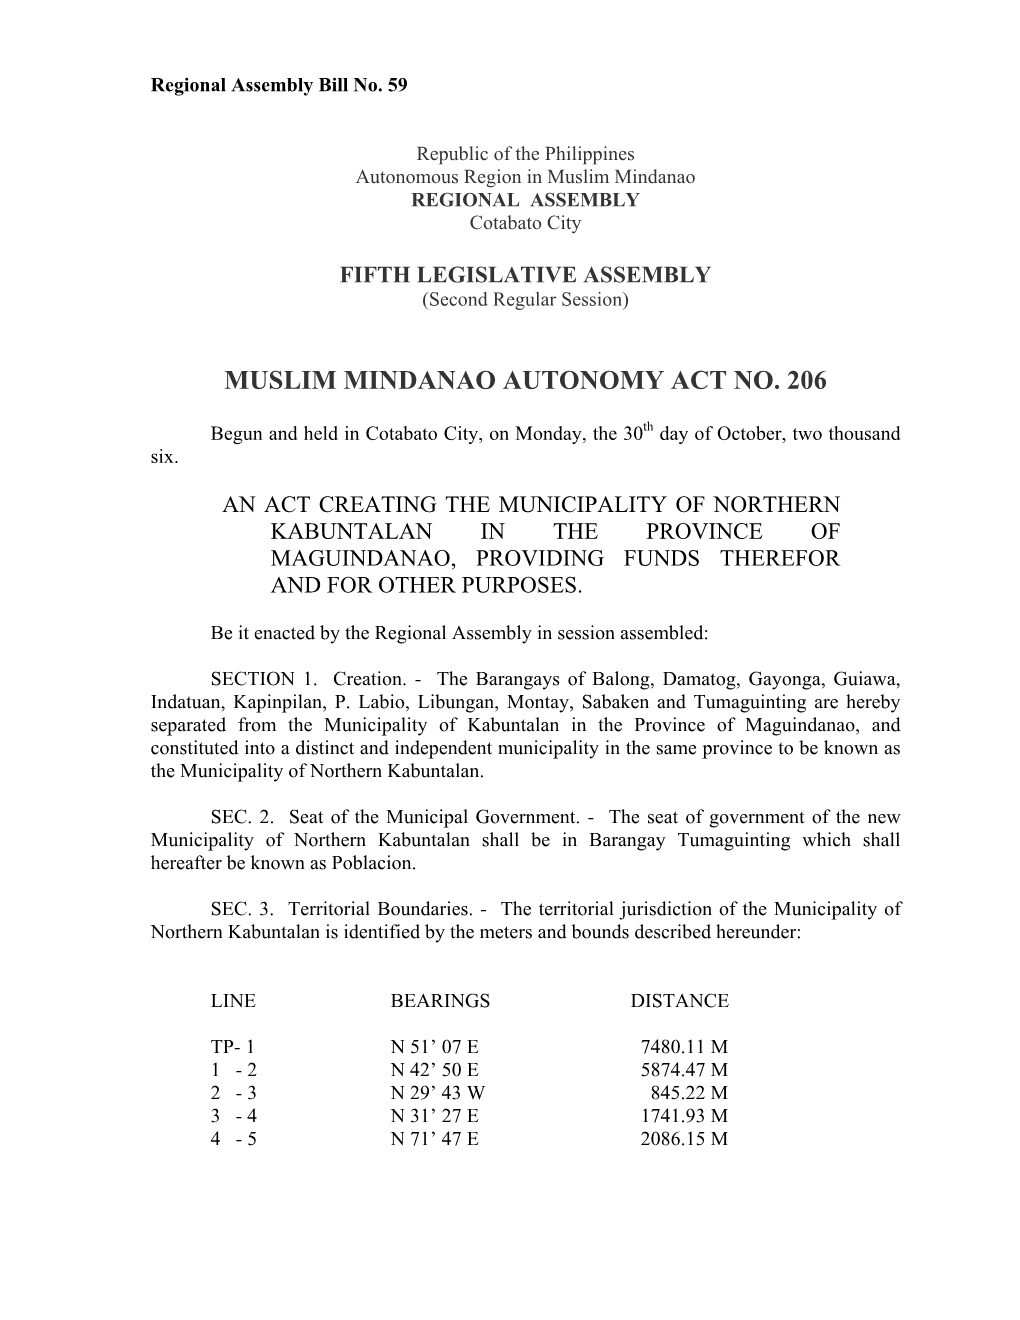 Muslim Mindanao Autonomy Act No. 206